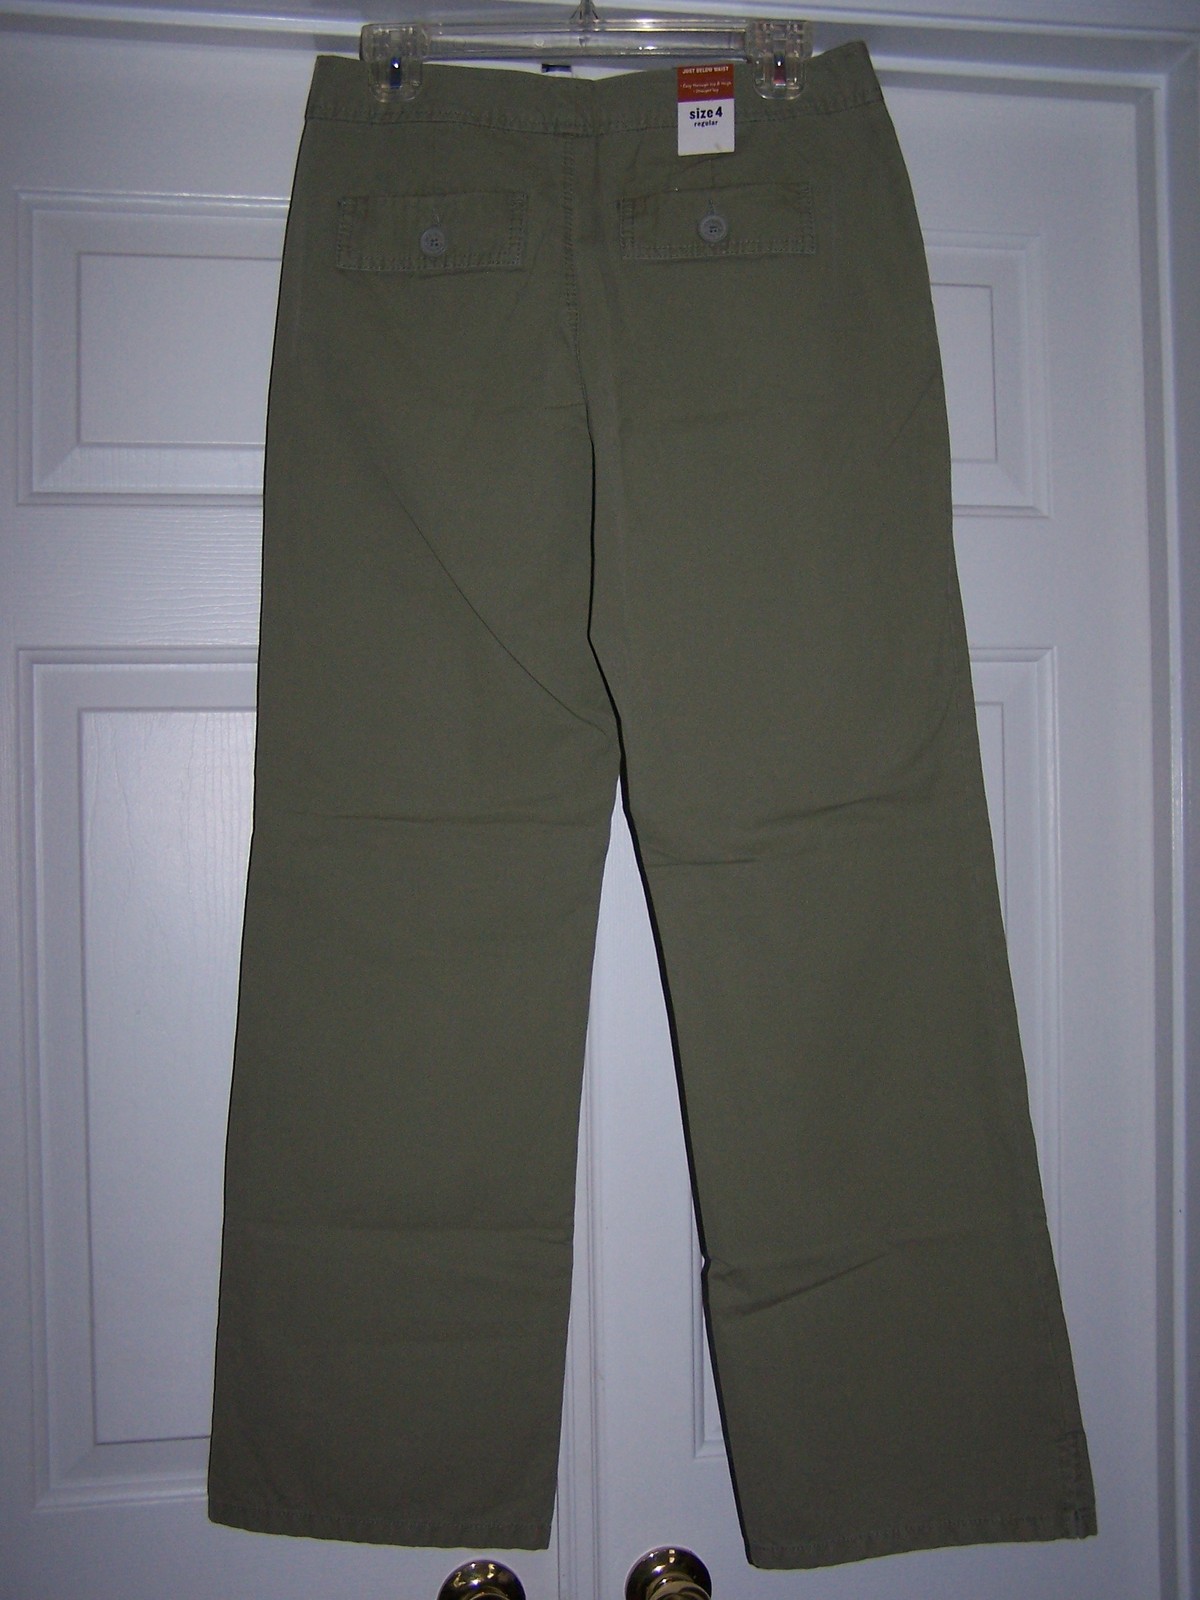 Old Navy women's pants flair green size 4 just below waist 100% cotton ...